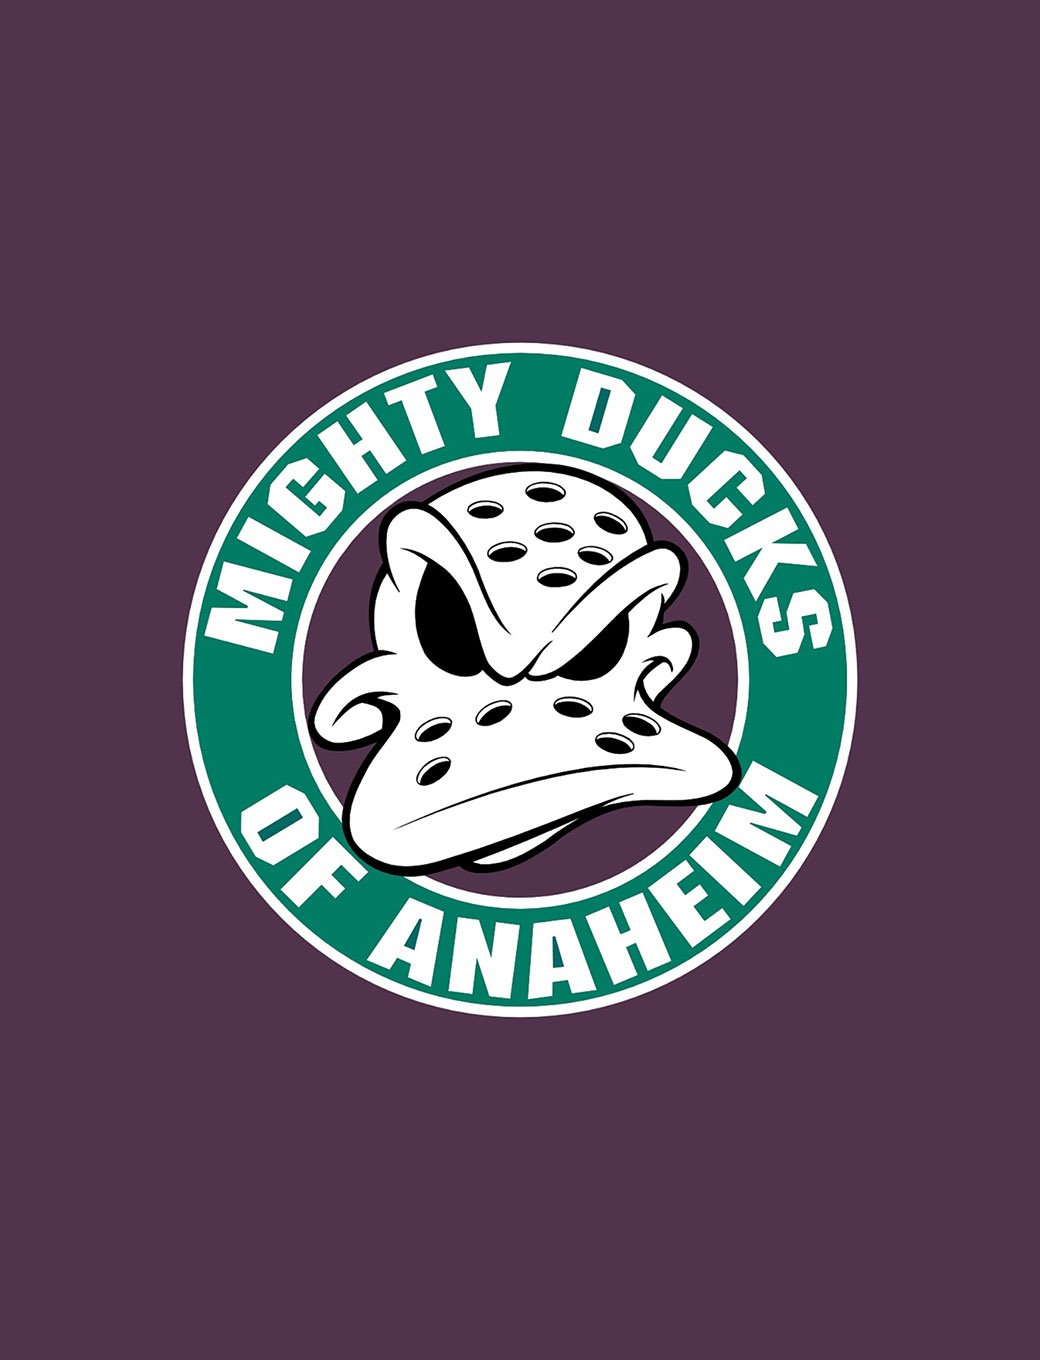  mighty ducks of anaheim logo   parallax HD iPhone iPad wallpaper